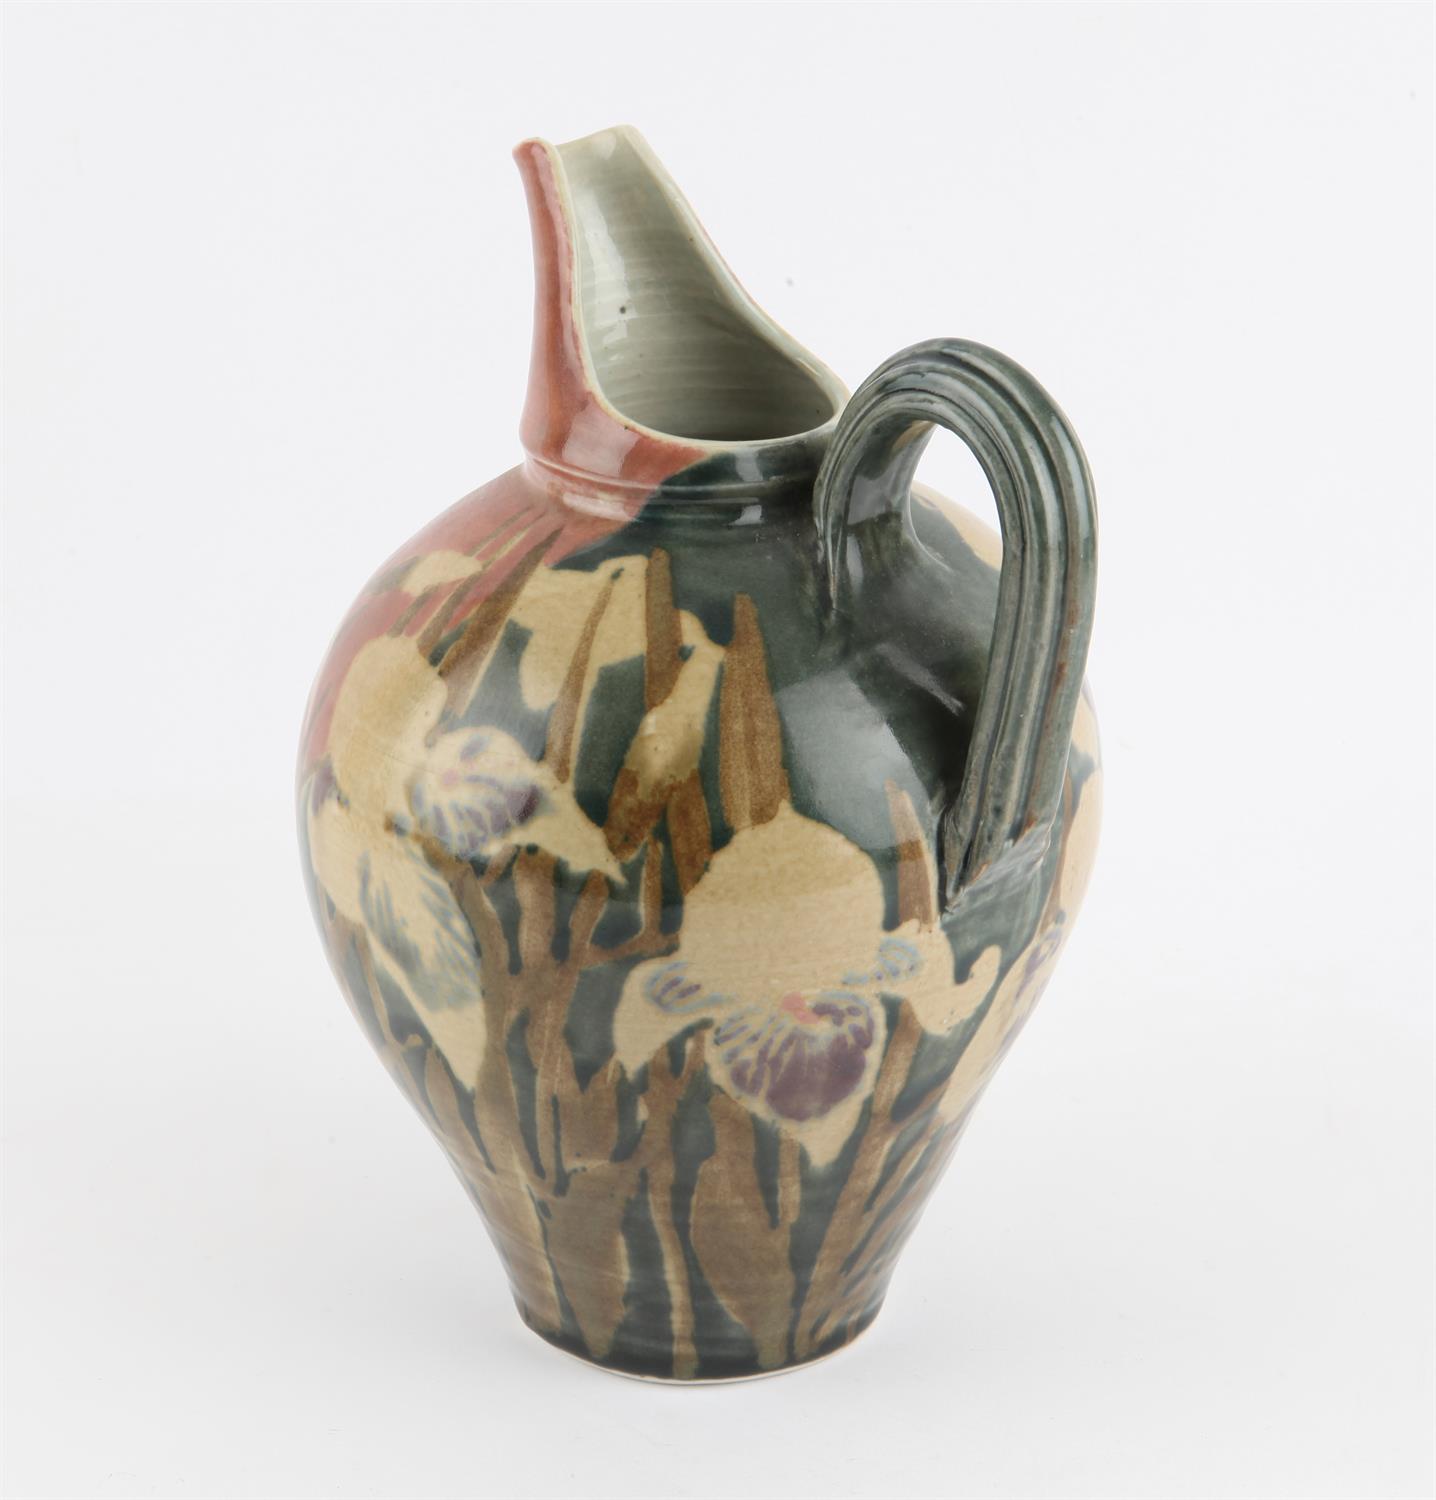 Desmond Clover studio pottery jug, with Iris decoration, 27cm high, - Image 2 of 2